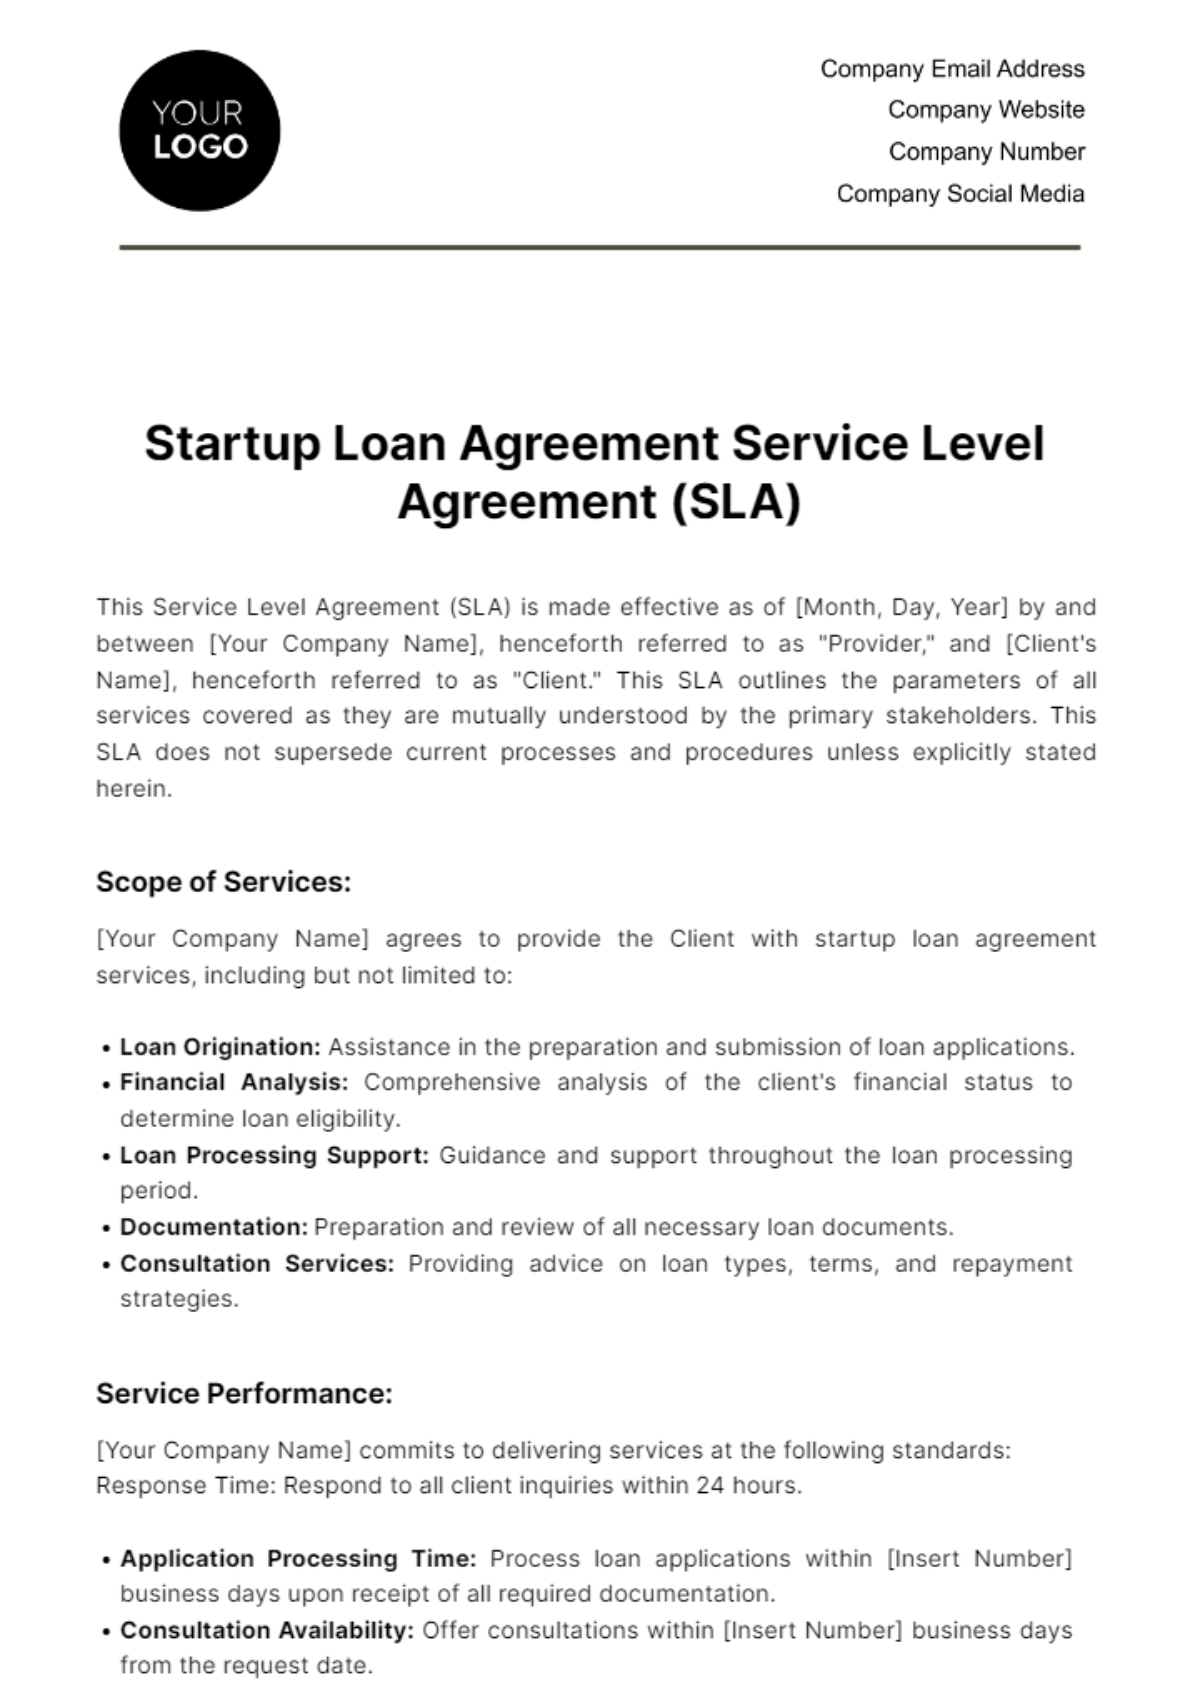 Startup Loan Agreement Service Level Agreement (SLA) Template